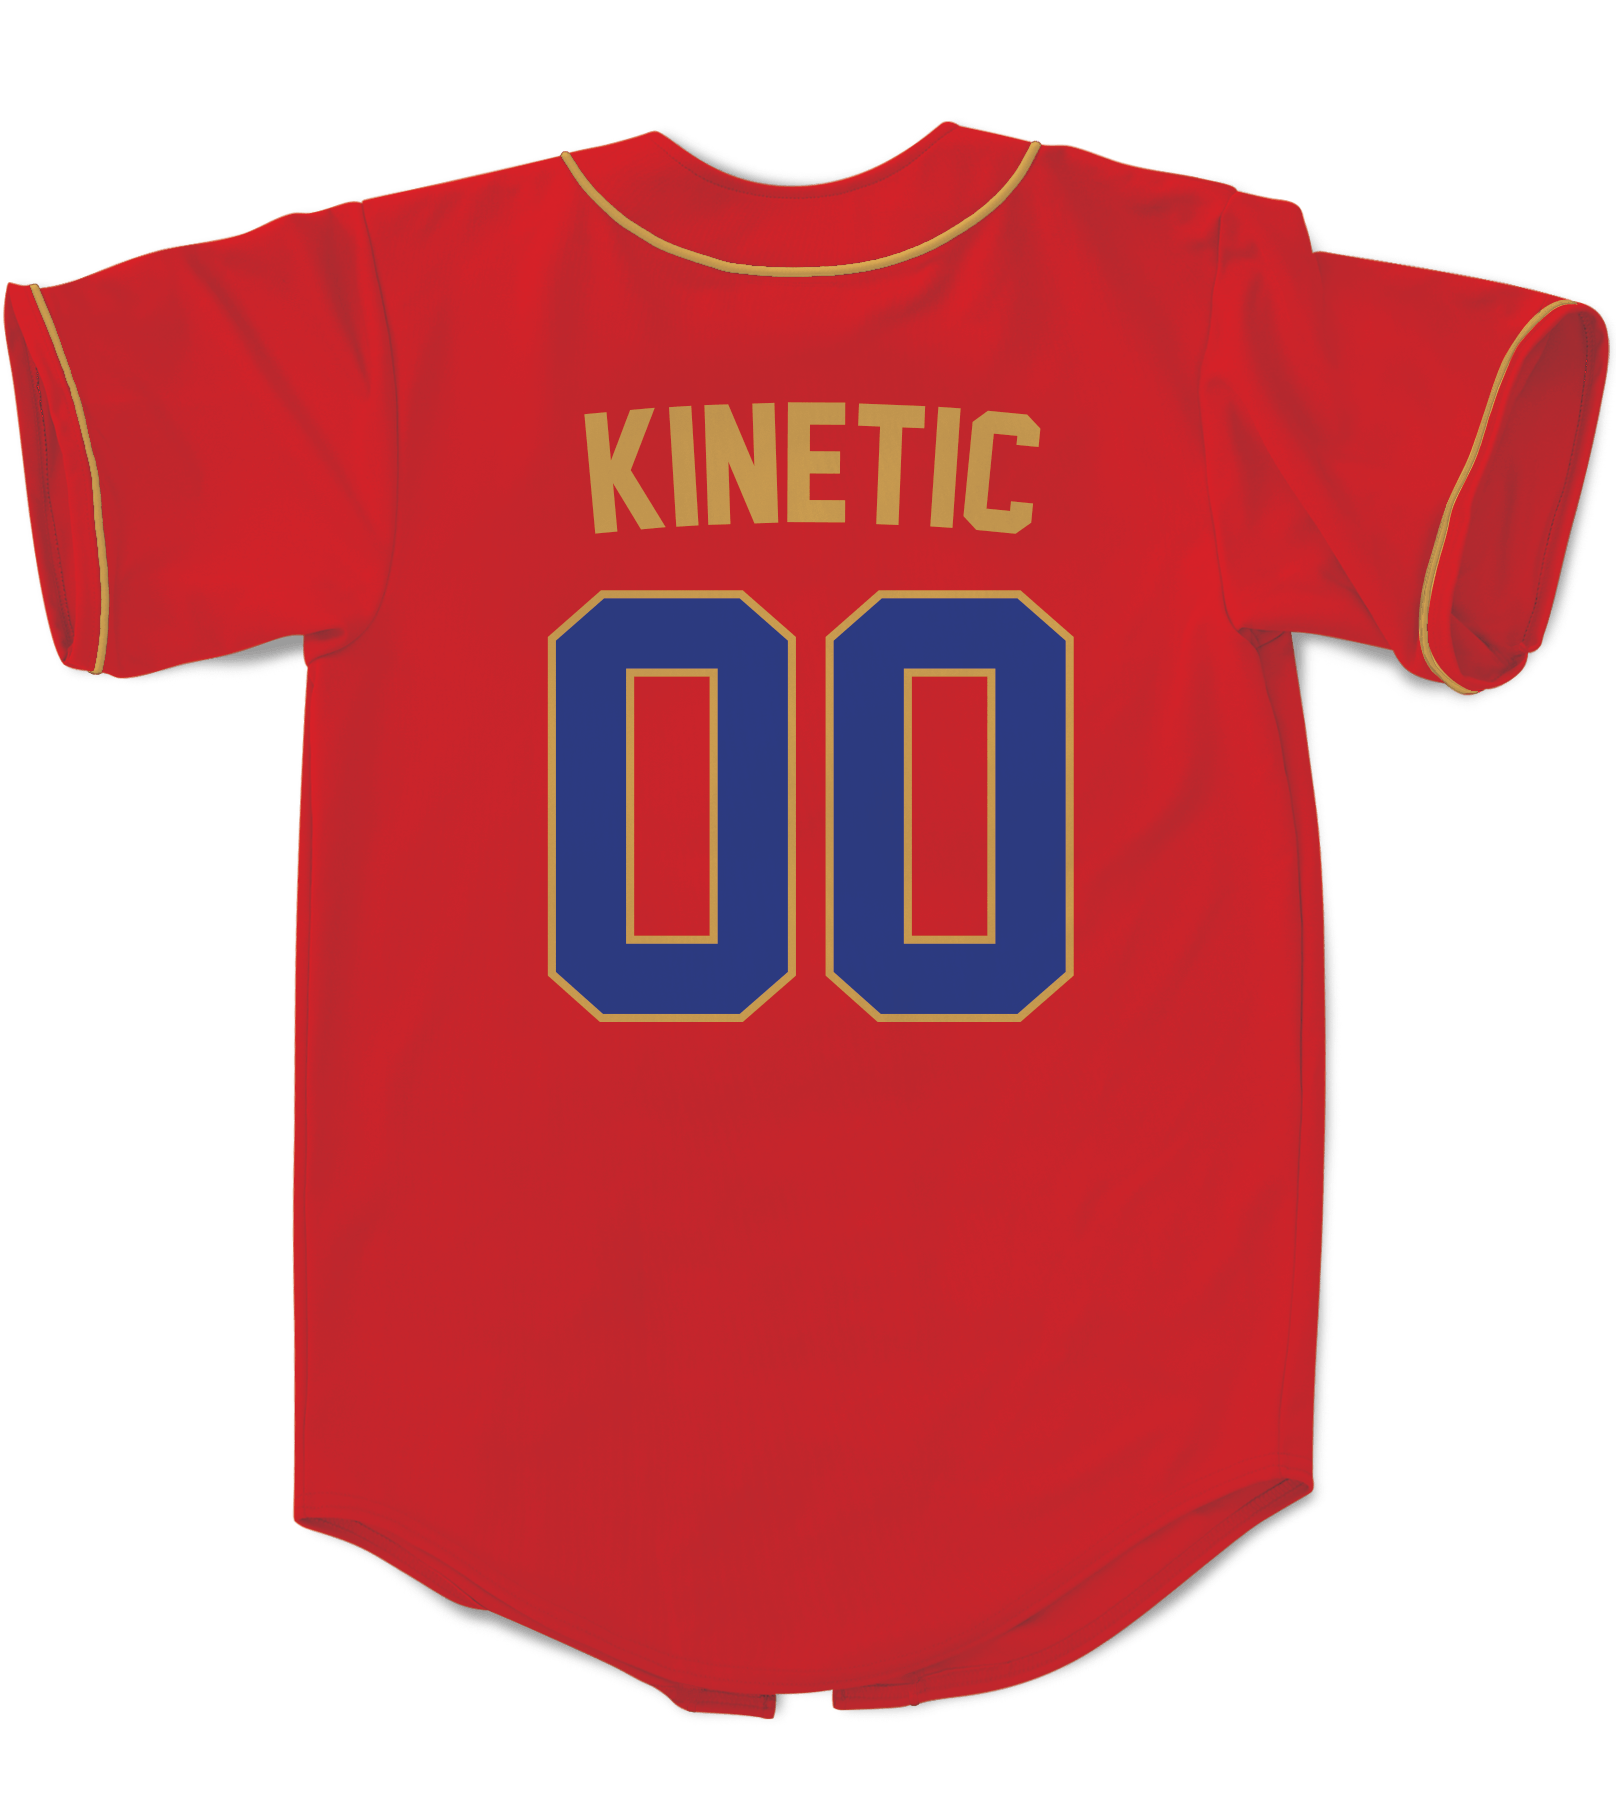 CHI PHI - The Block Baseball Jersey Premium Baseball Kinetic Society LLC 